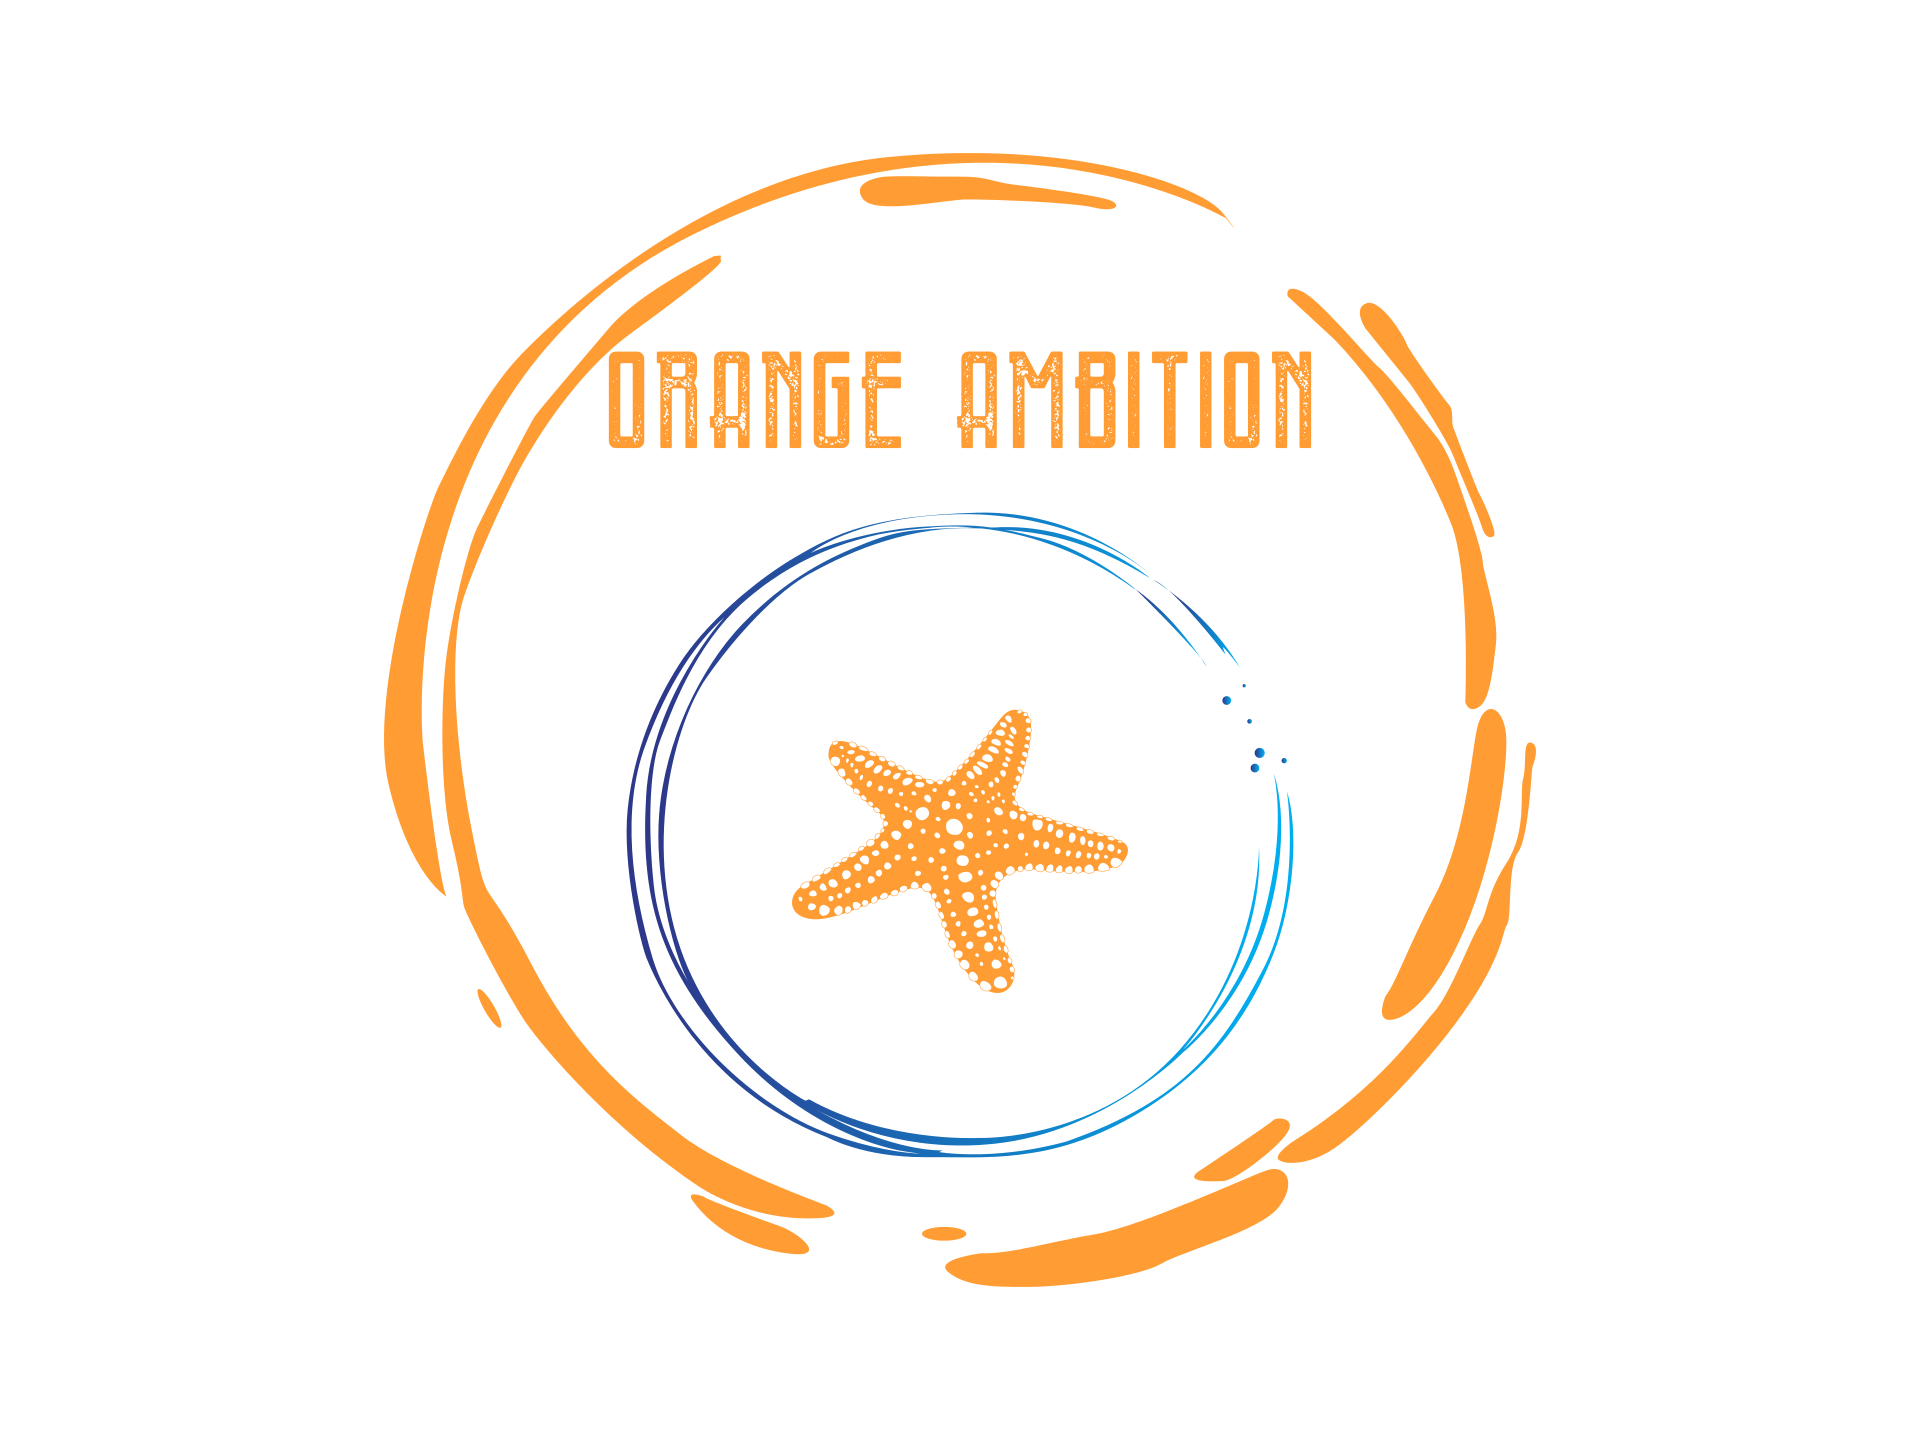 Orange Ambition Design